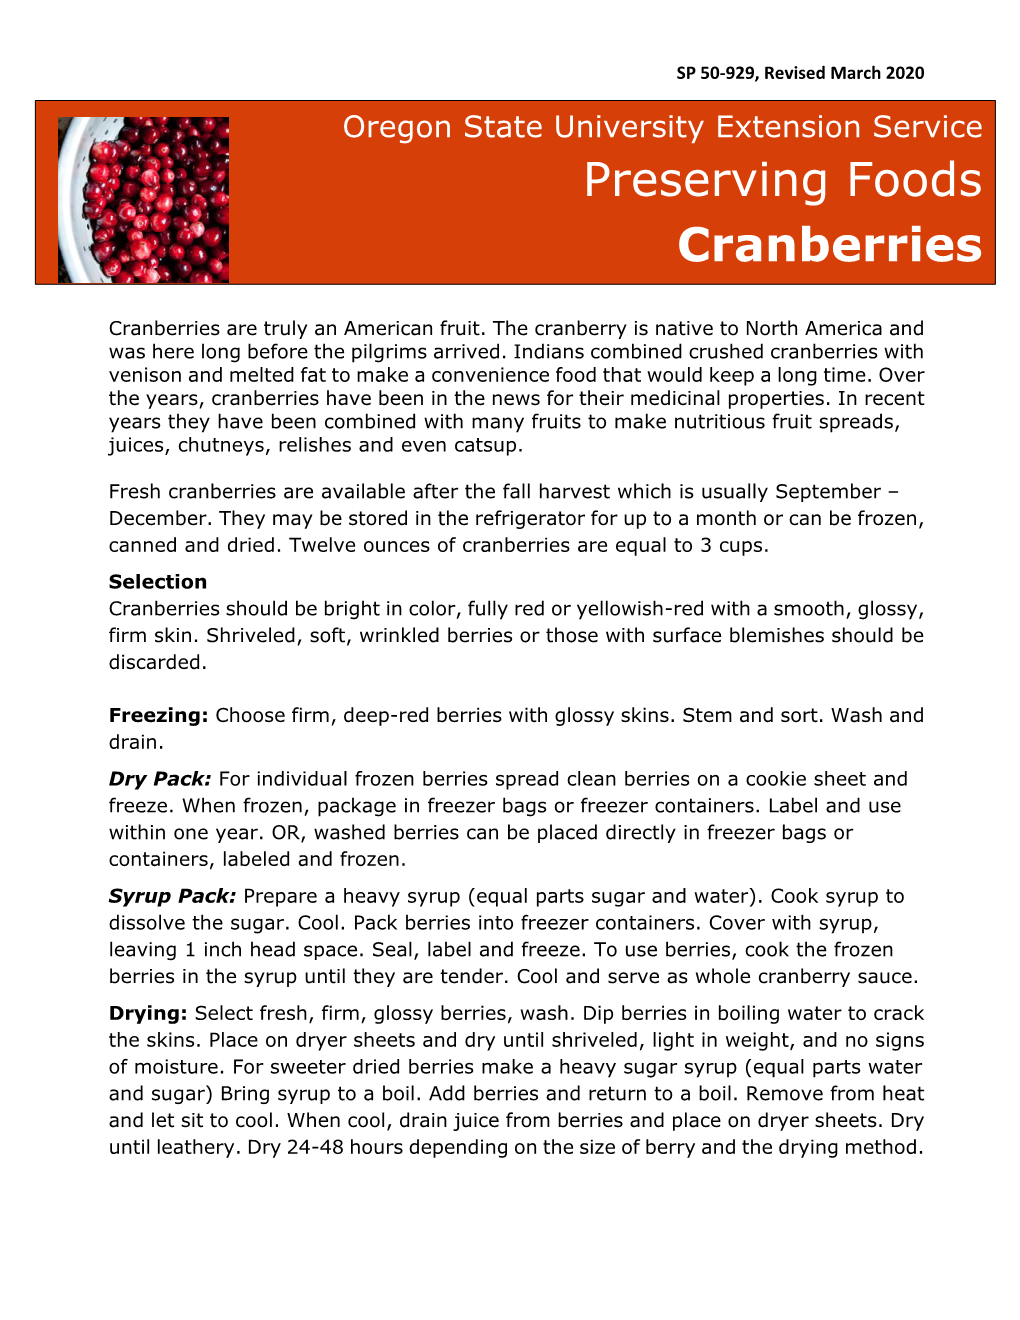 Preserving Foods Cranberries